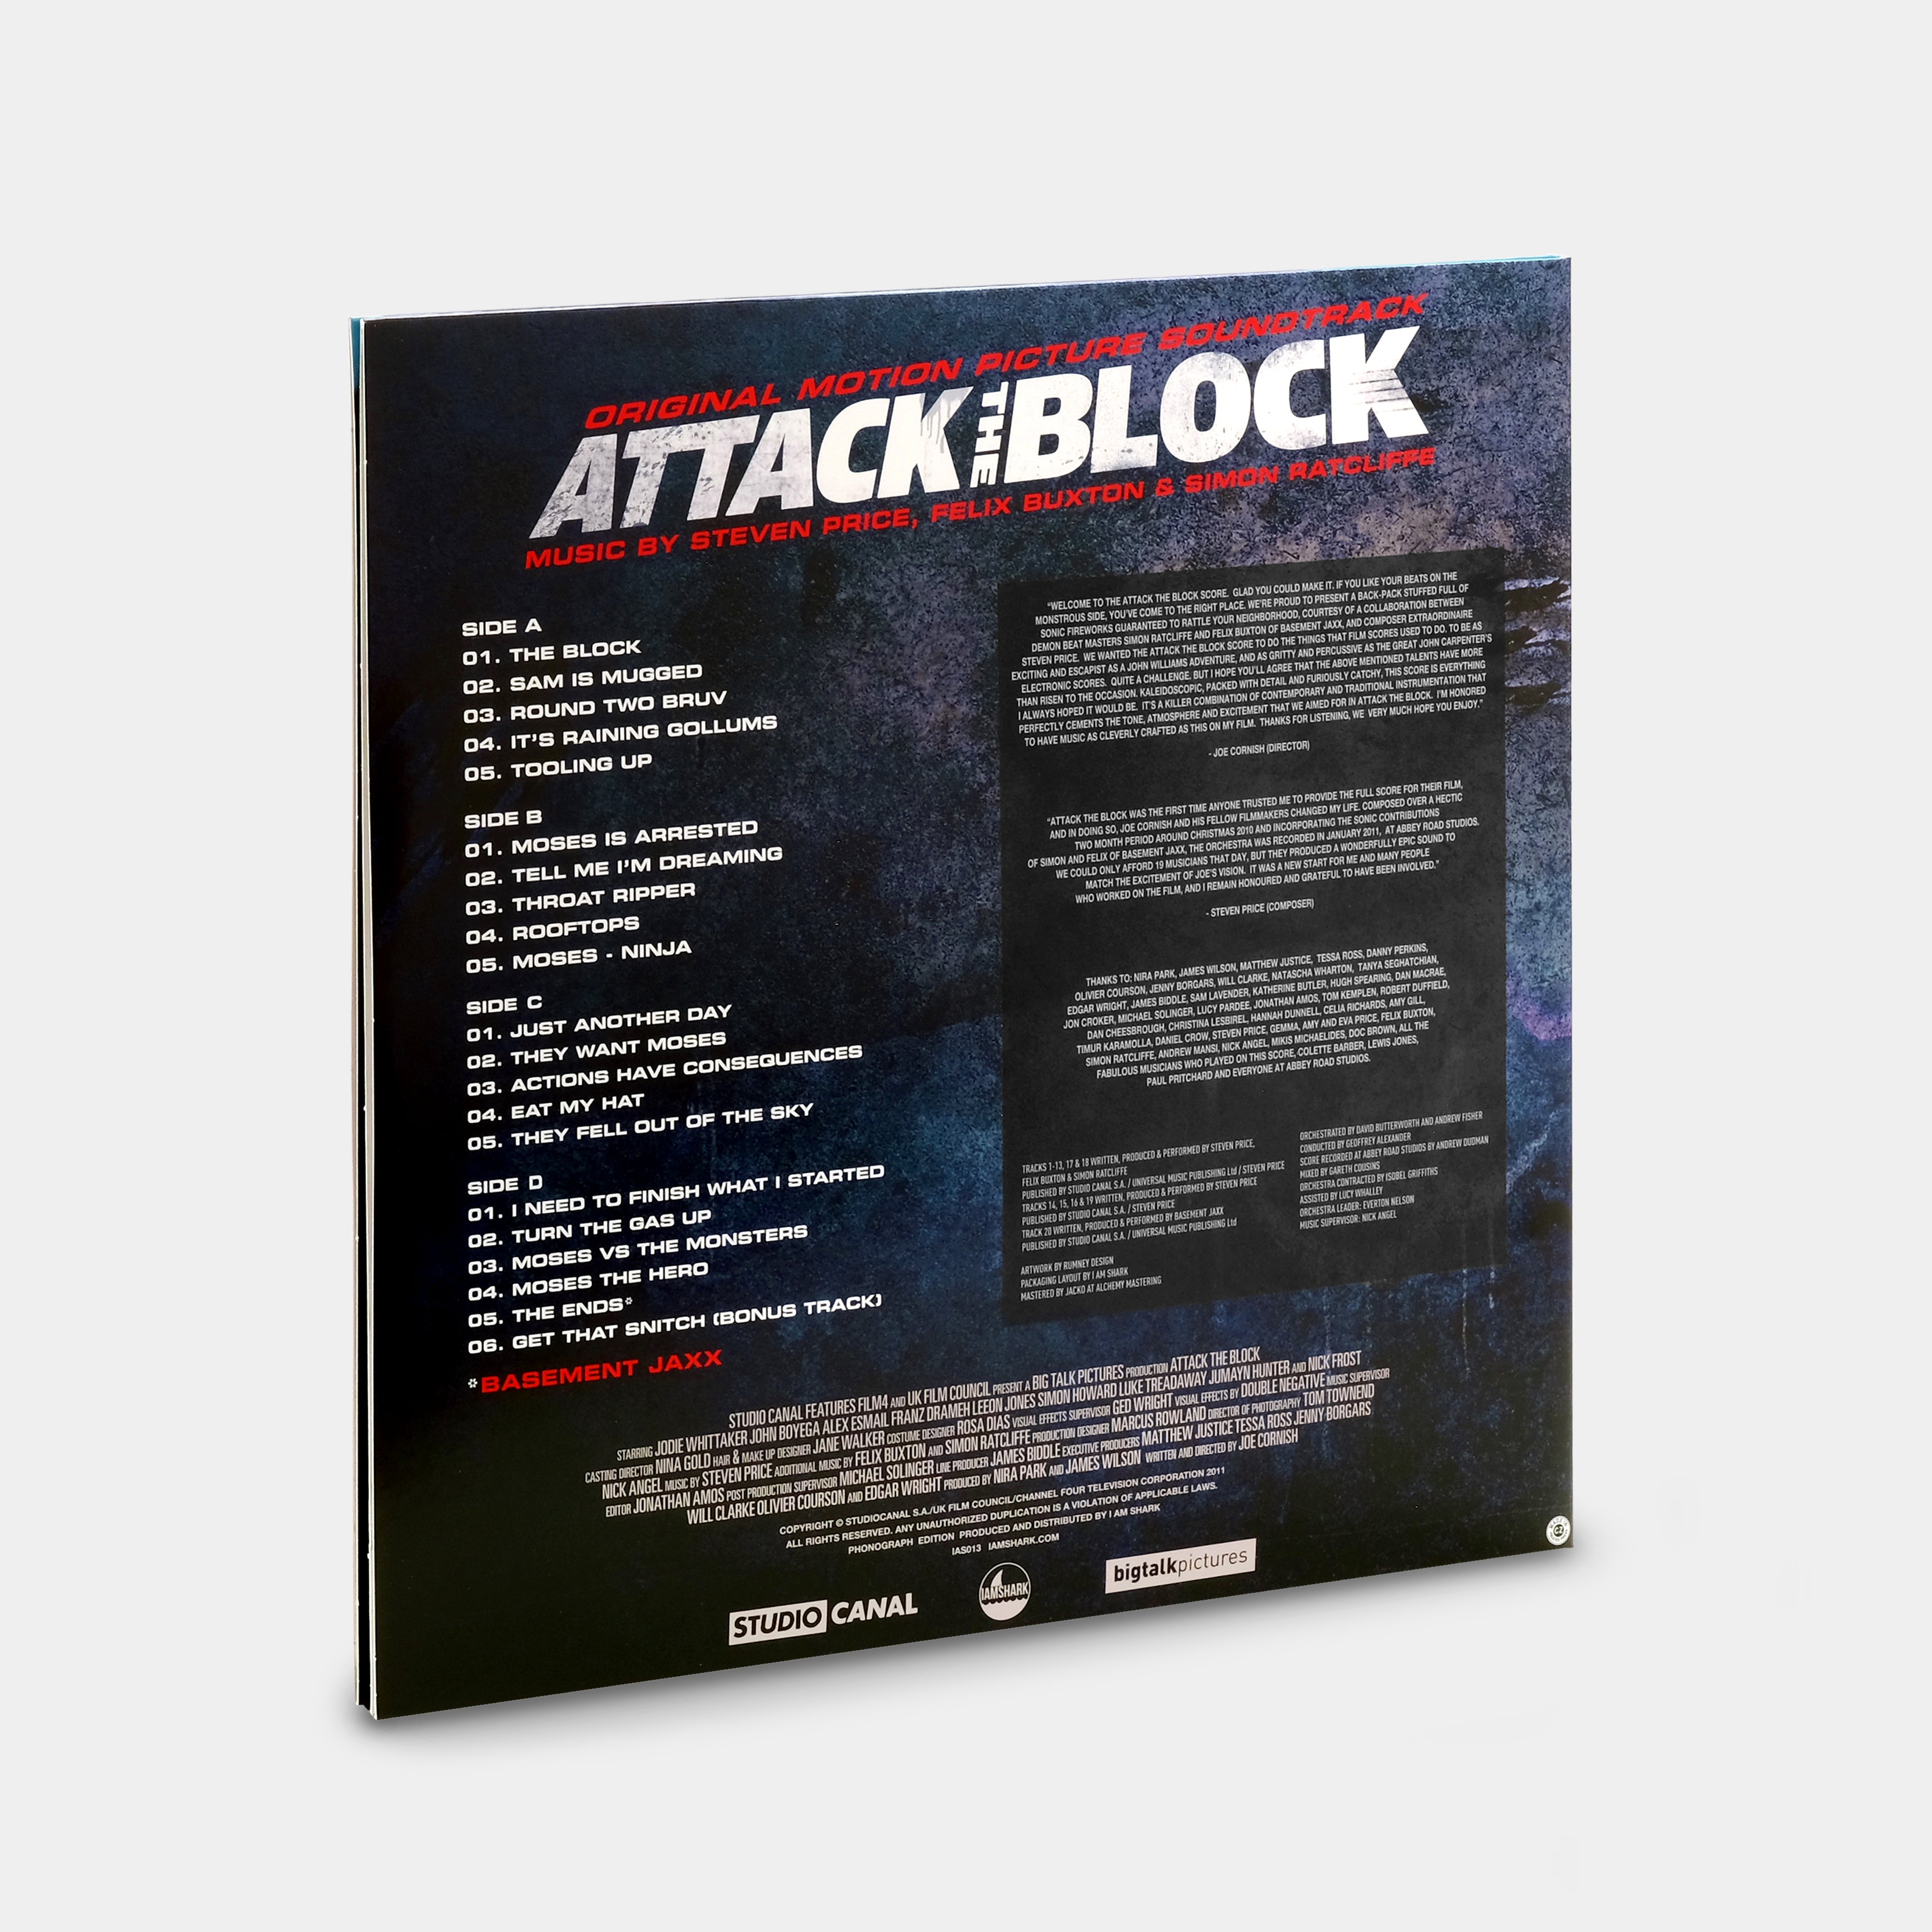 Steven Price, Felix Buxton and Simon Ratcliffe - Attack The Block (Original Motion Picture Soundtrack) 2xLP Glow In The Dark Vinyl Record